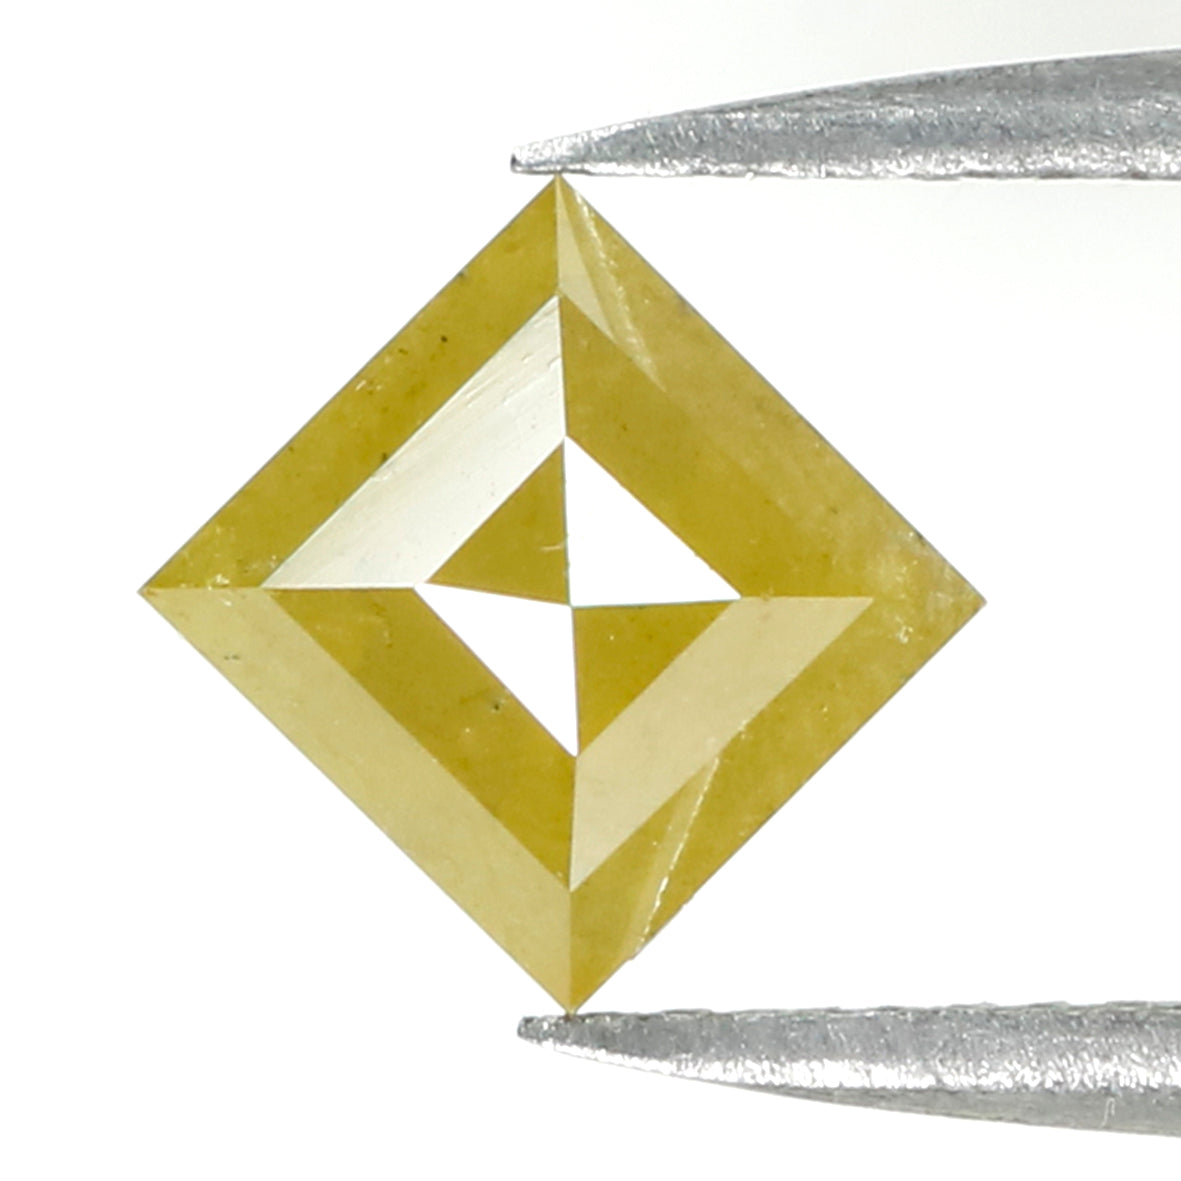 1.29 Ct Natural Loose Kite Shape Diamond Yellow Color Kite Shape Diamond 8.45 MM Natural Loose Diamond Yellow Kite Rose Cut Diamond QK2235